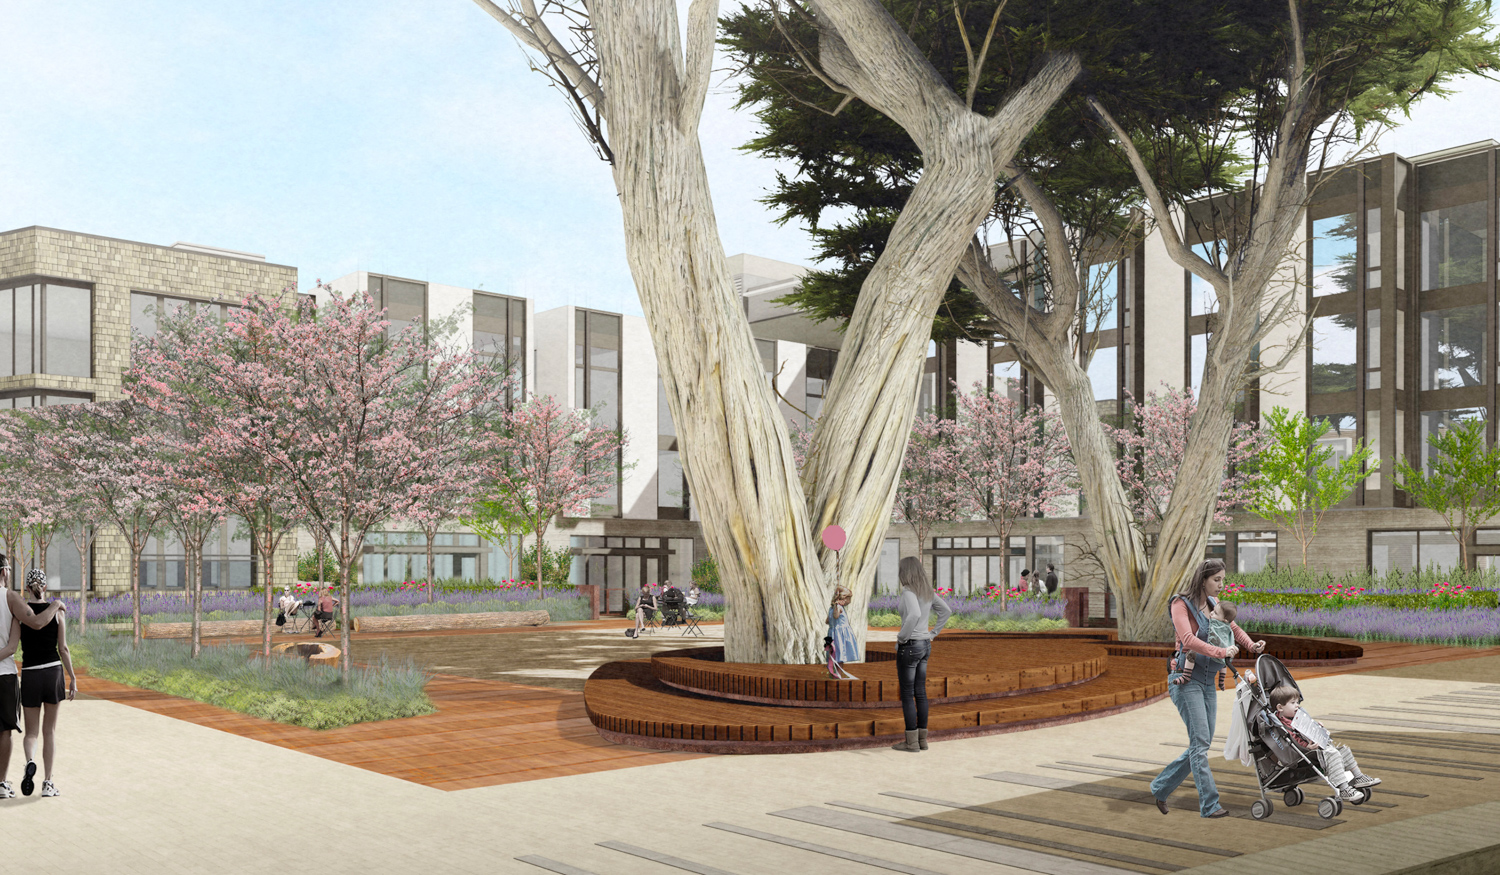 3333 California street Cypress Square, rendering via Planning Application